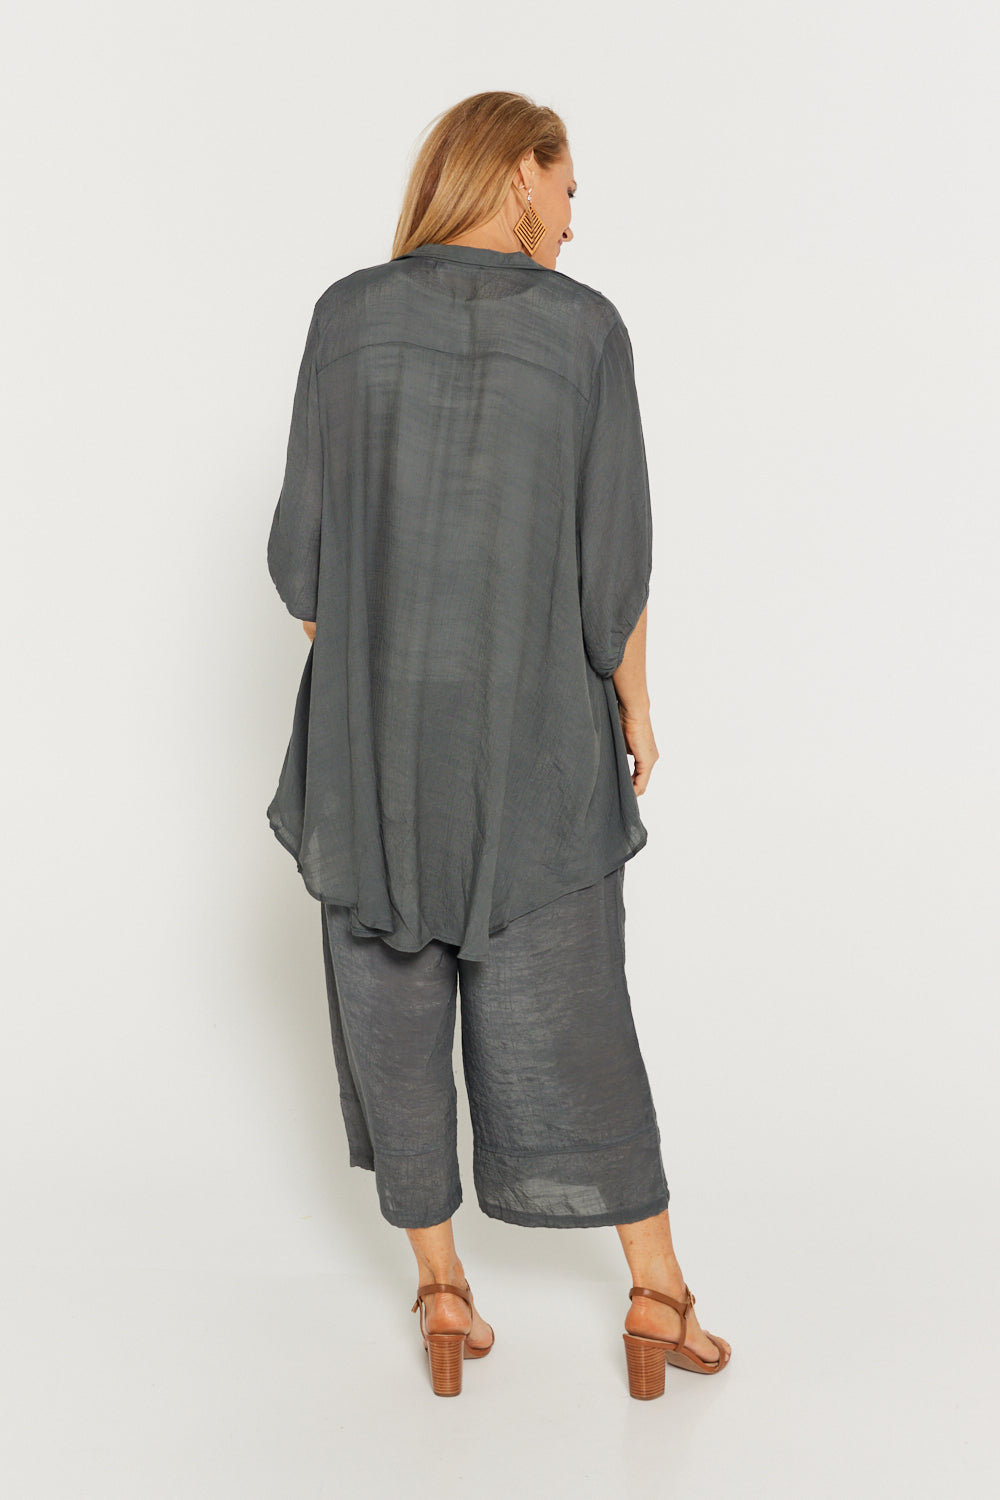 Lisa Comfort Shirt - Charcoal - Goupick